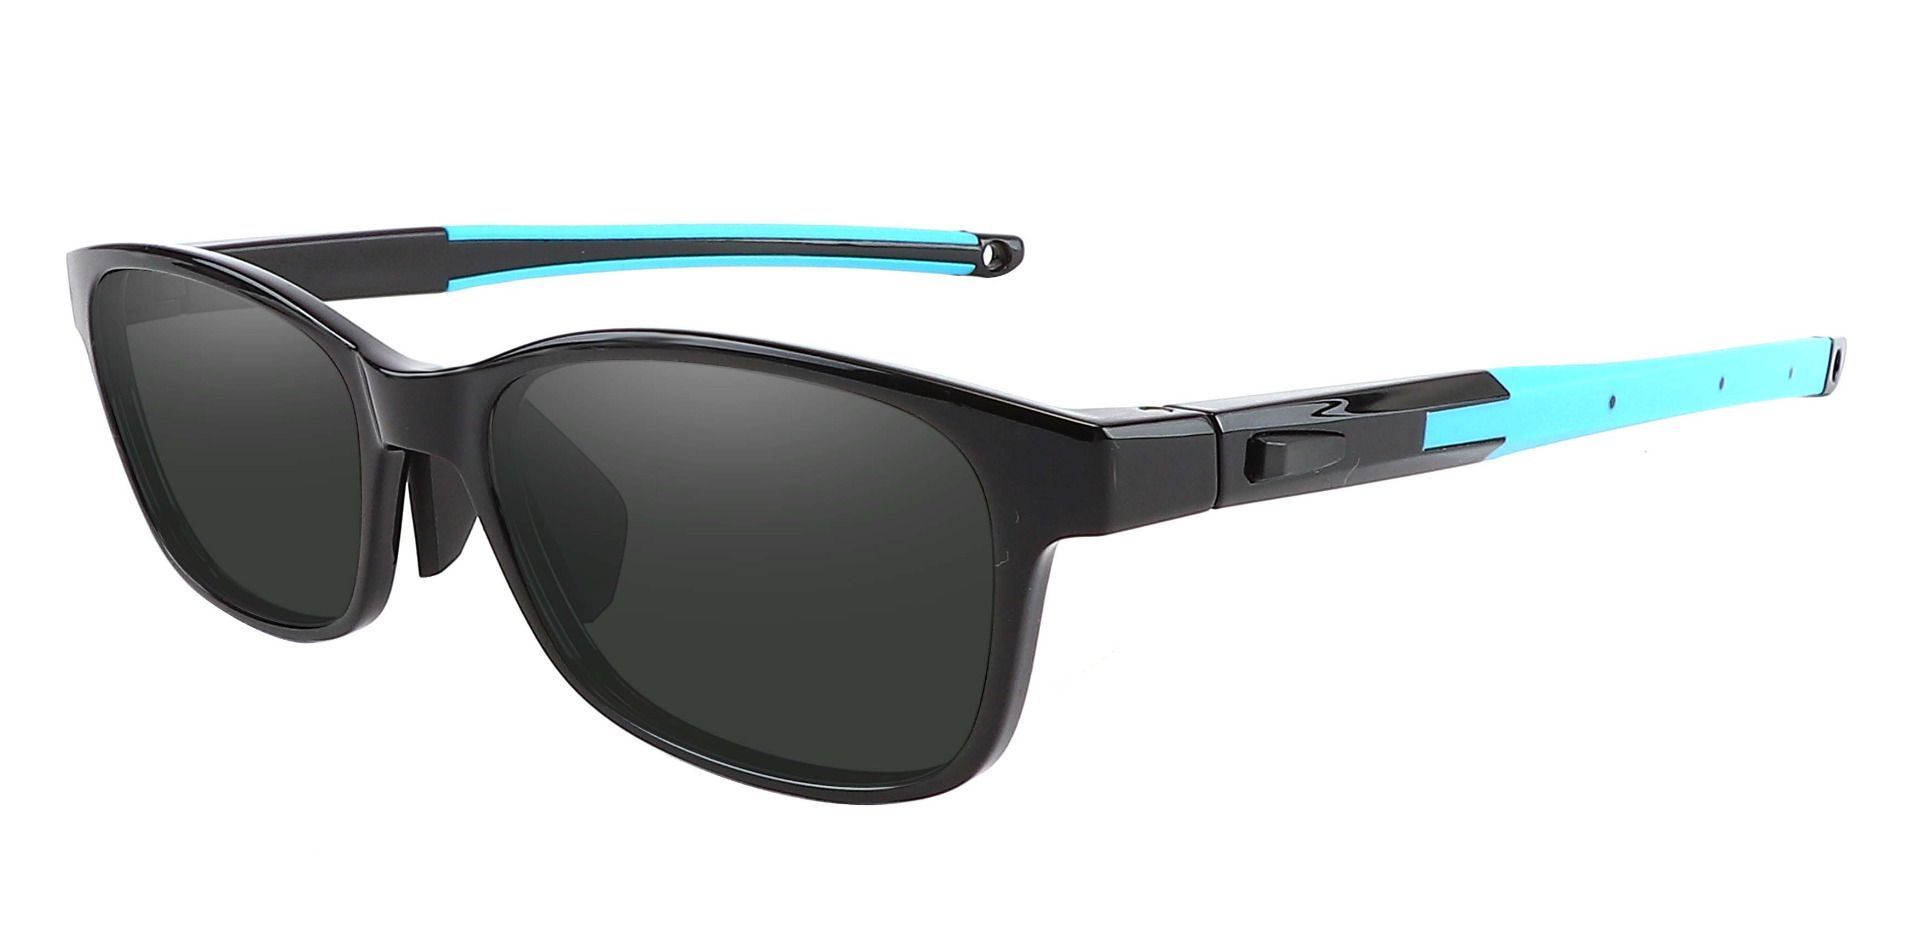 Higgins Rectangle Prescription Sunglasses - Black Frame With Gray Lenses